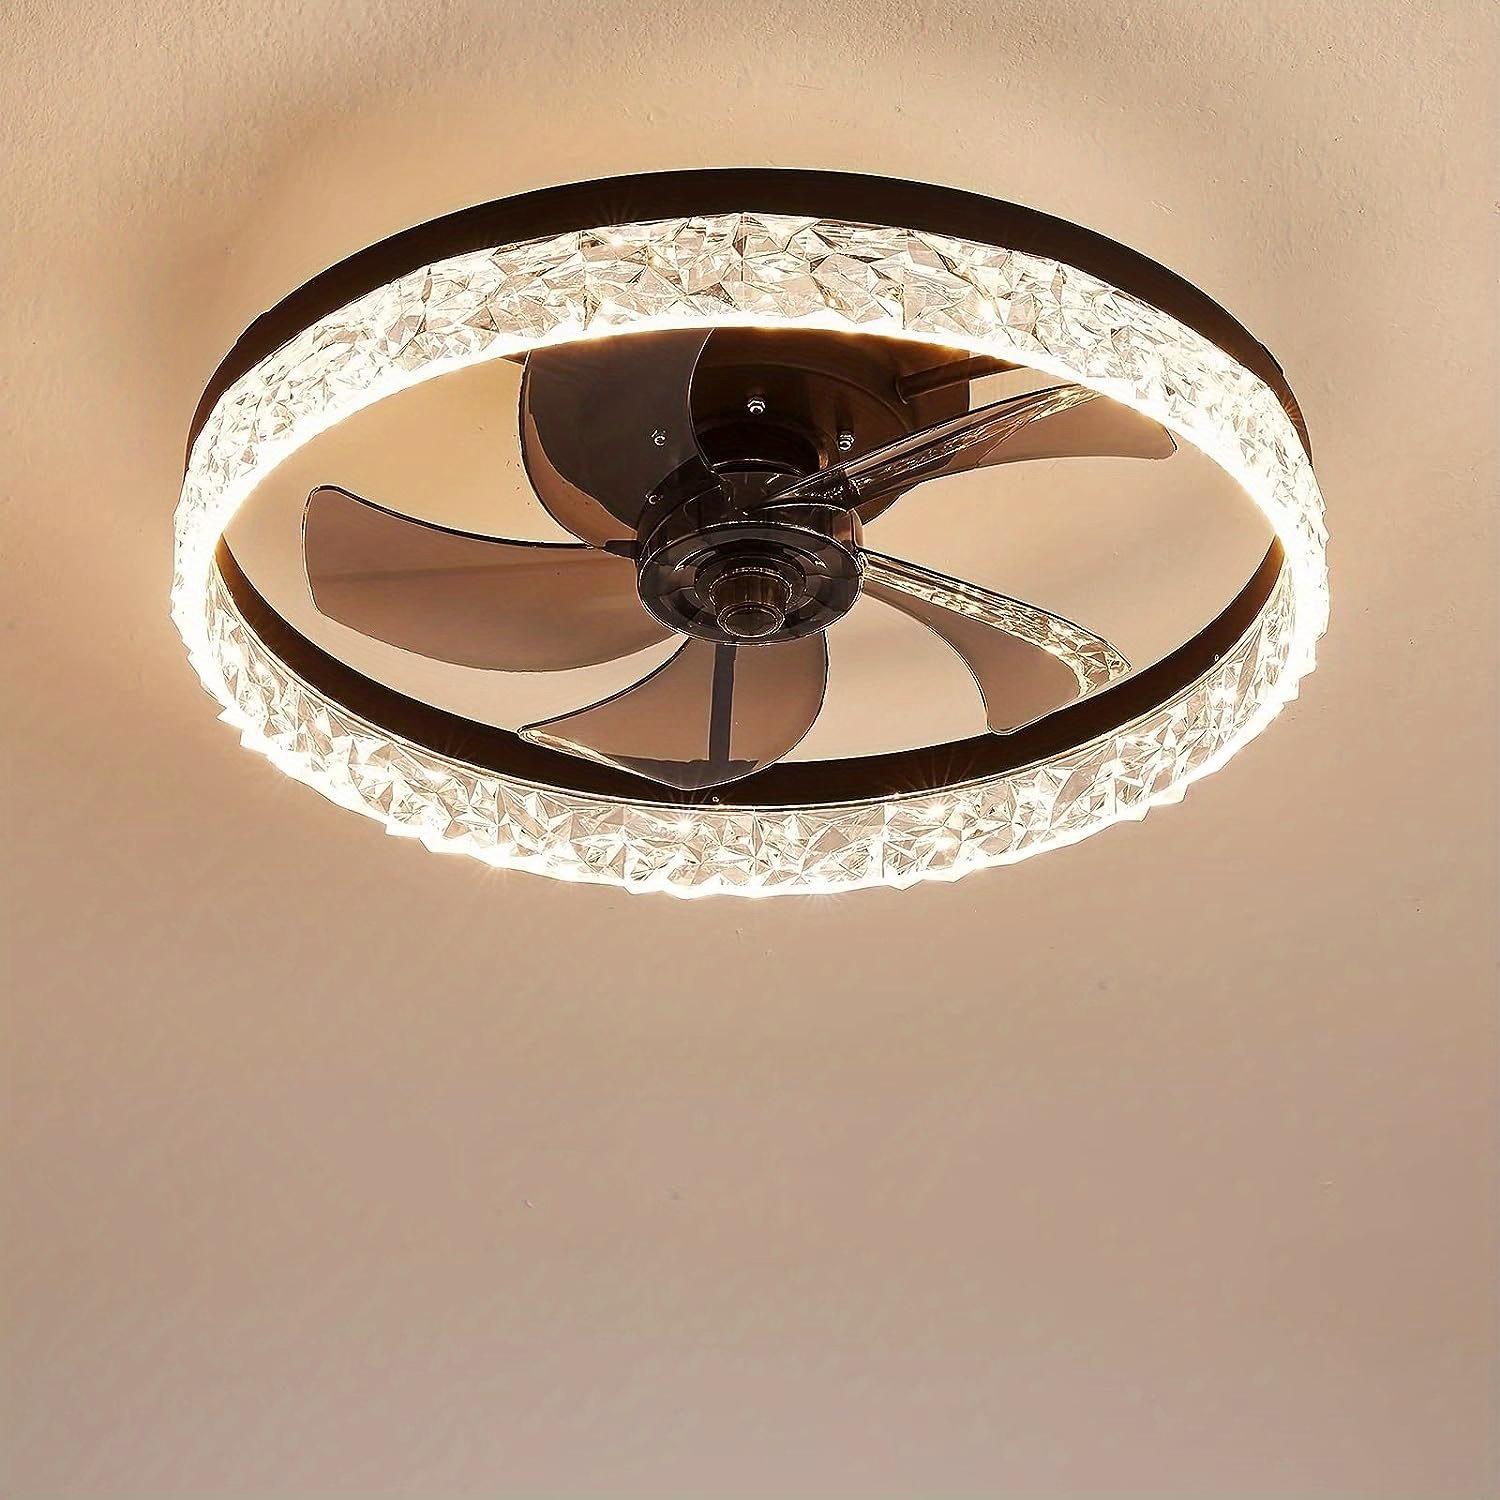 Ceiling Fan With Light Flush Mount